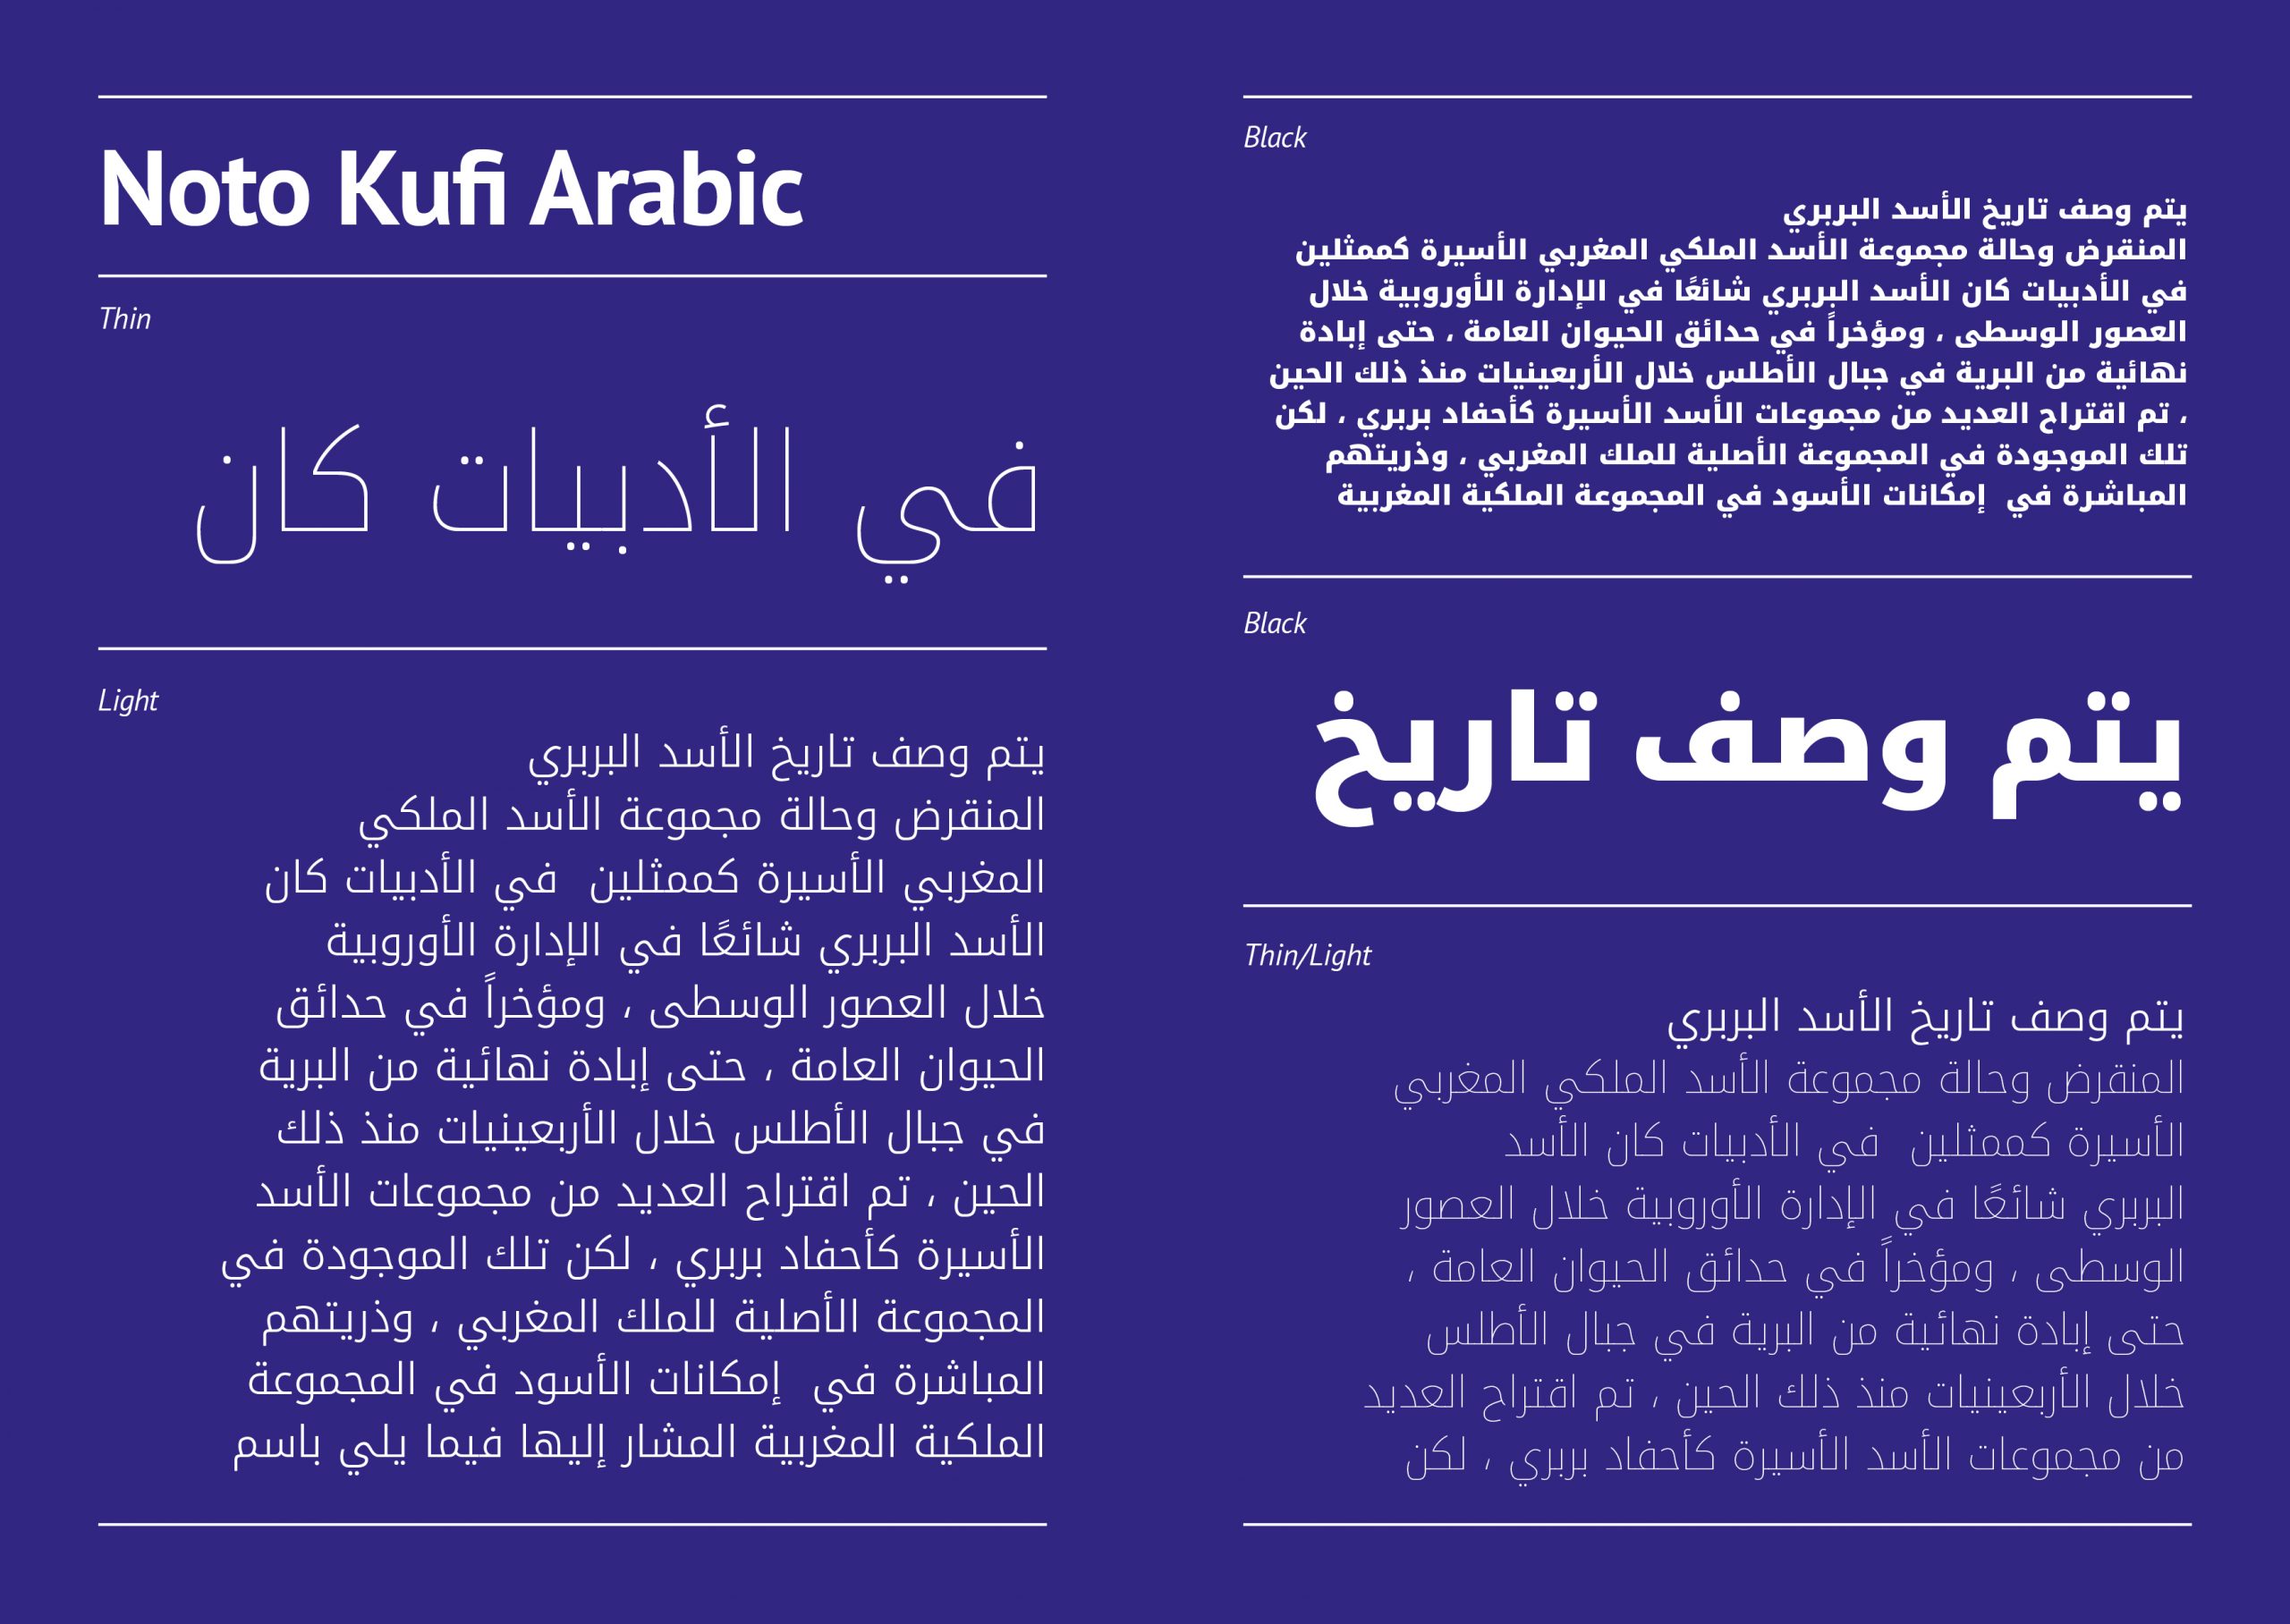 Noto Kufi Arabic